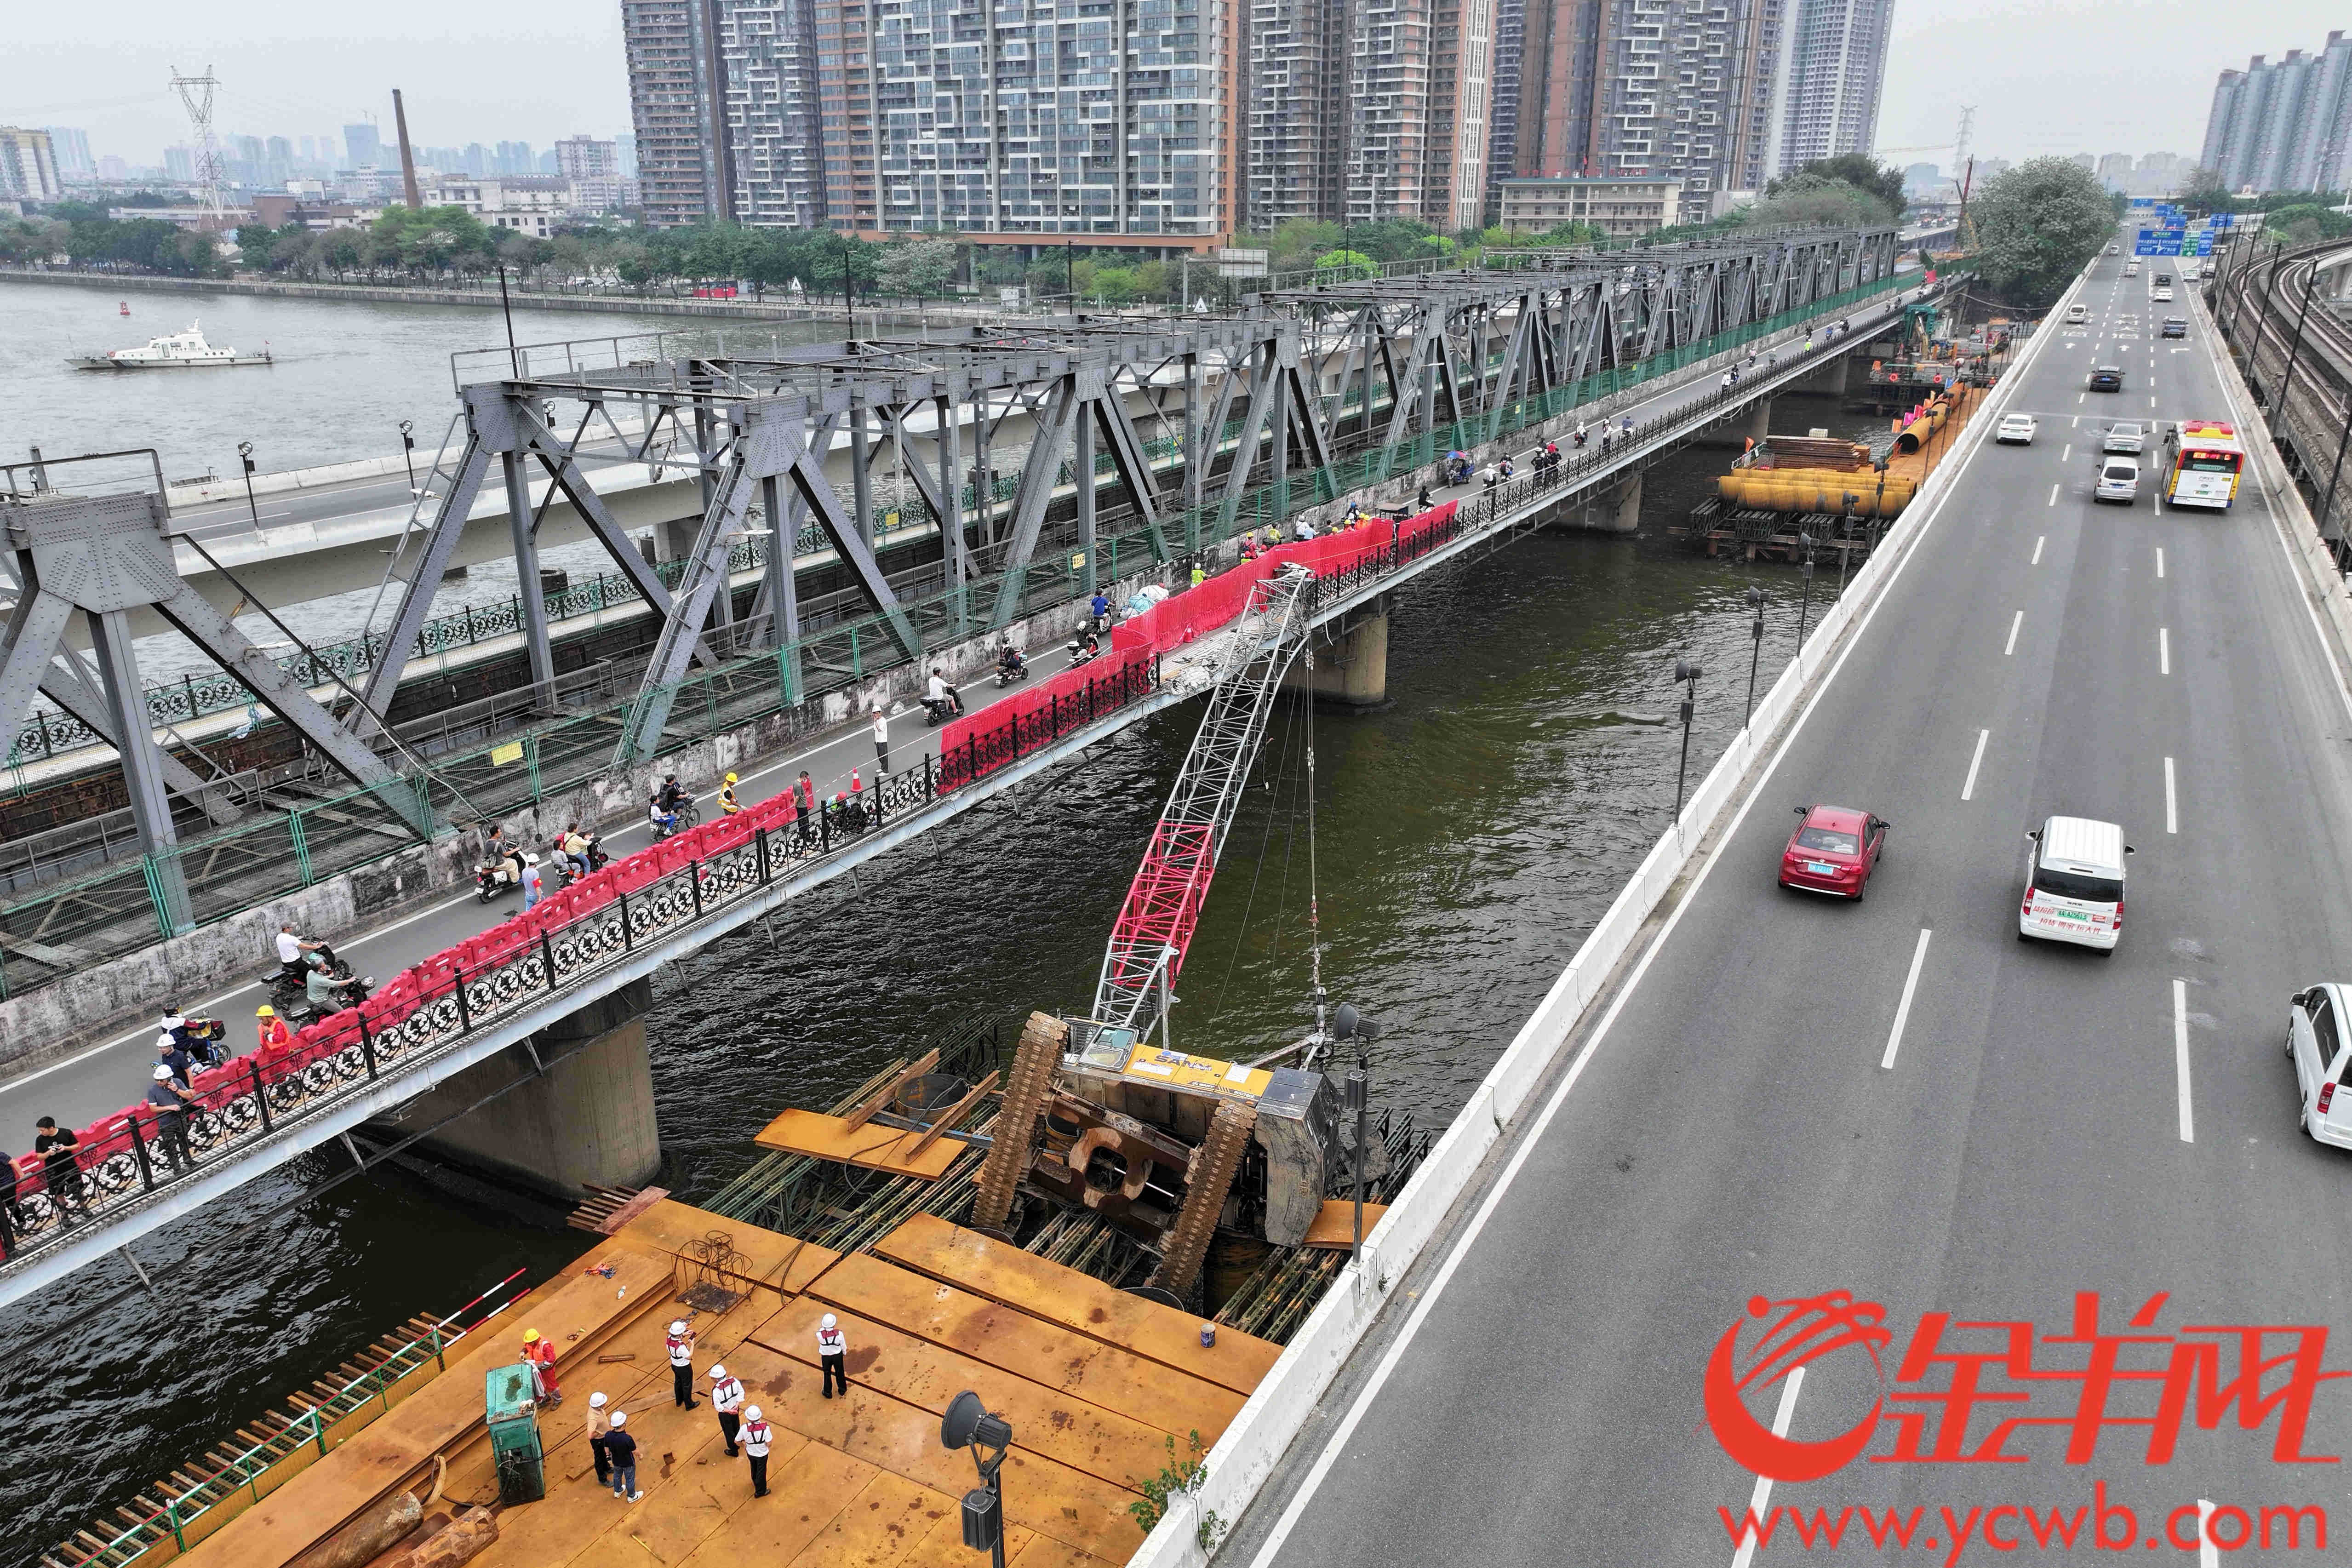 Bwin必赢广州珠江大桥吊机颠覆致局部桥体毁伤施工方称“司机操作不妥导致”(图2)